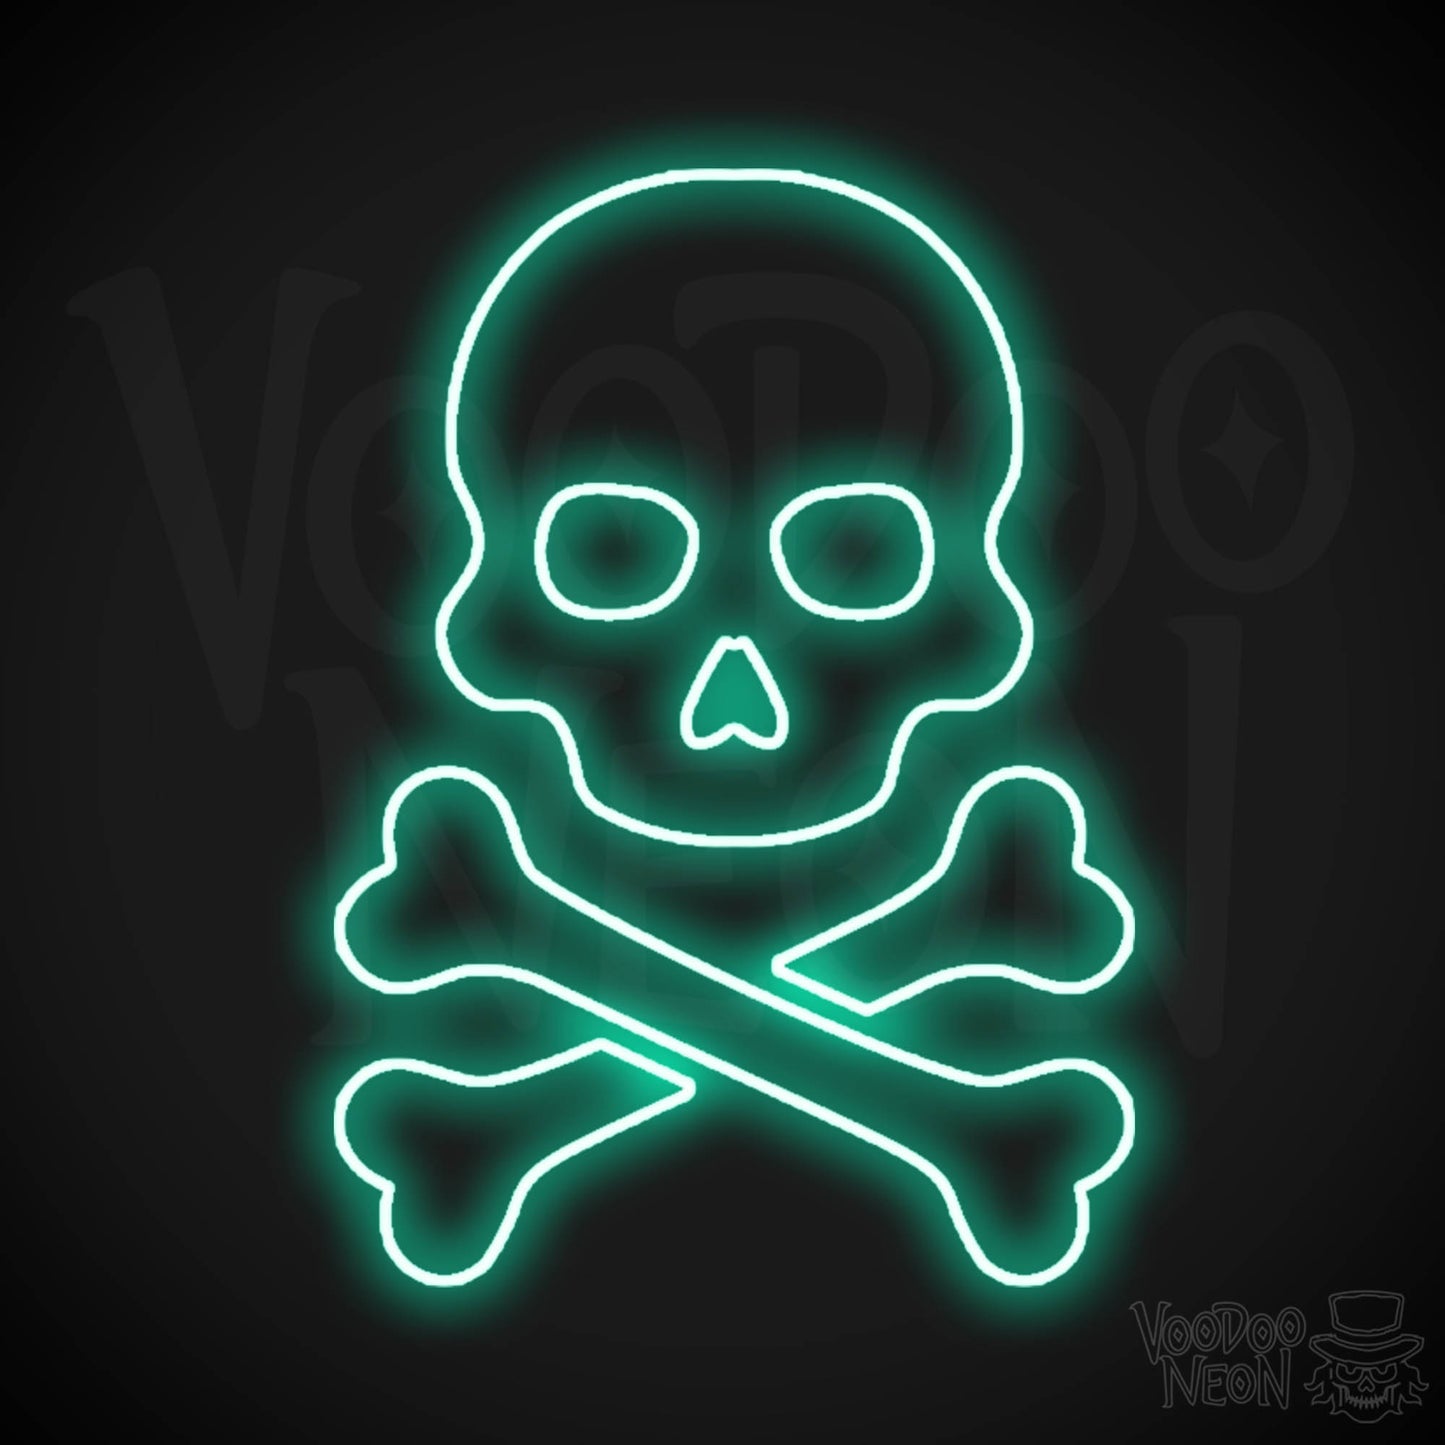 Pirate Skull & Crossbones Neon Sign - Neon Pirate Skull & Crossbones Sign - LED Lights - Color Light Green